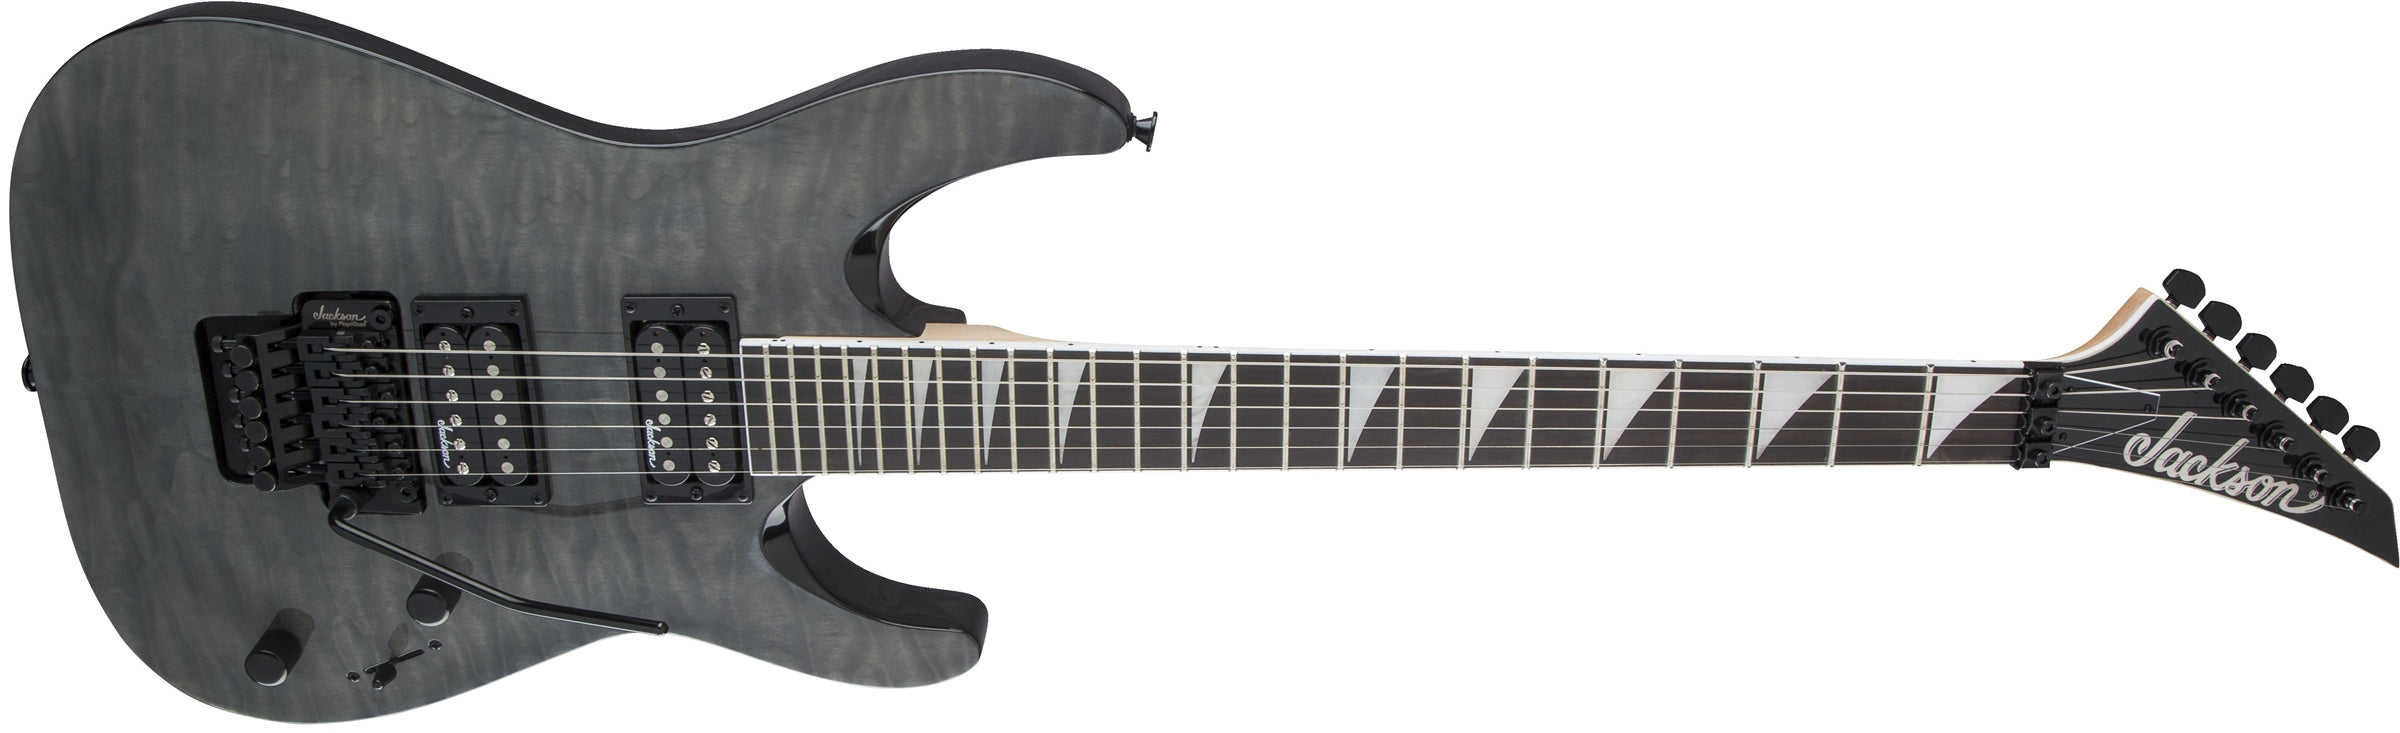 Jackson Dinky Arch Top JS32Q Dka Electric Guitar - Transparent Black